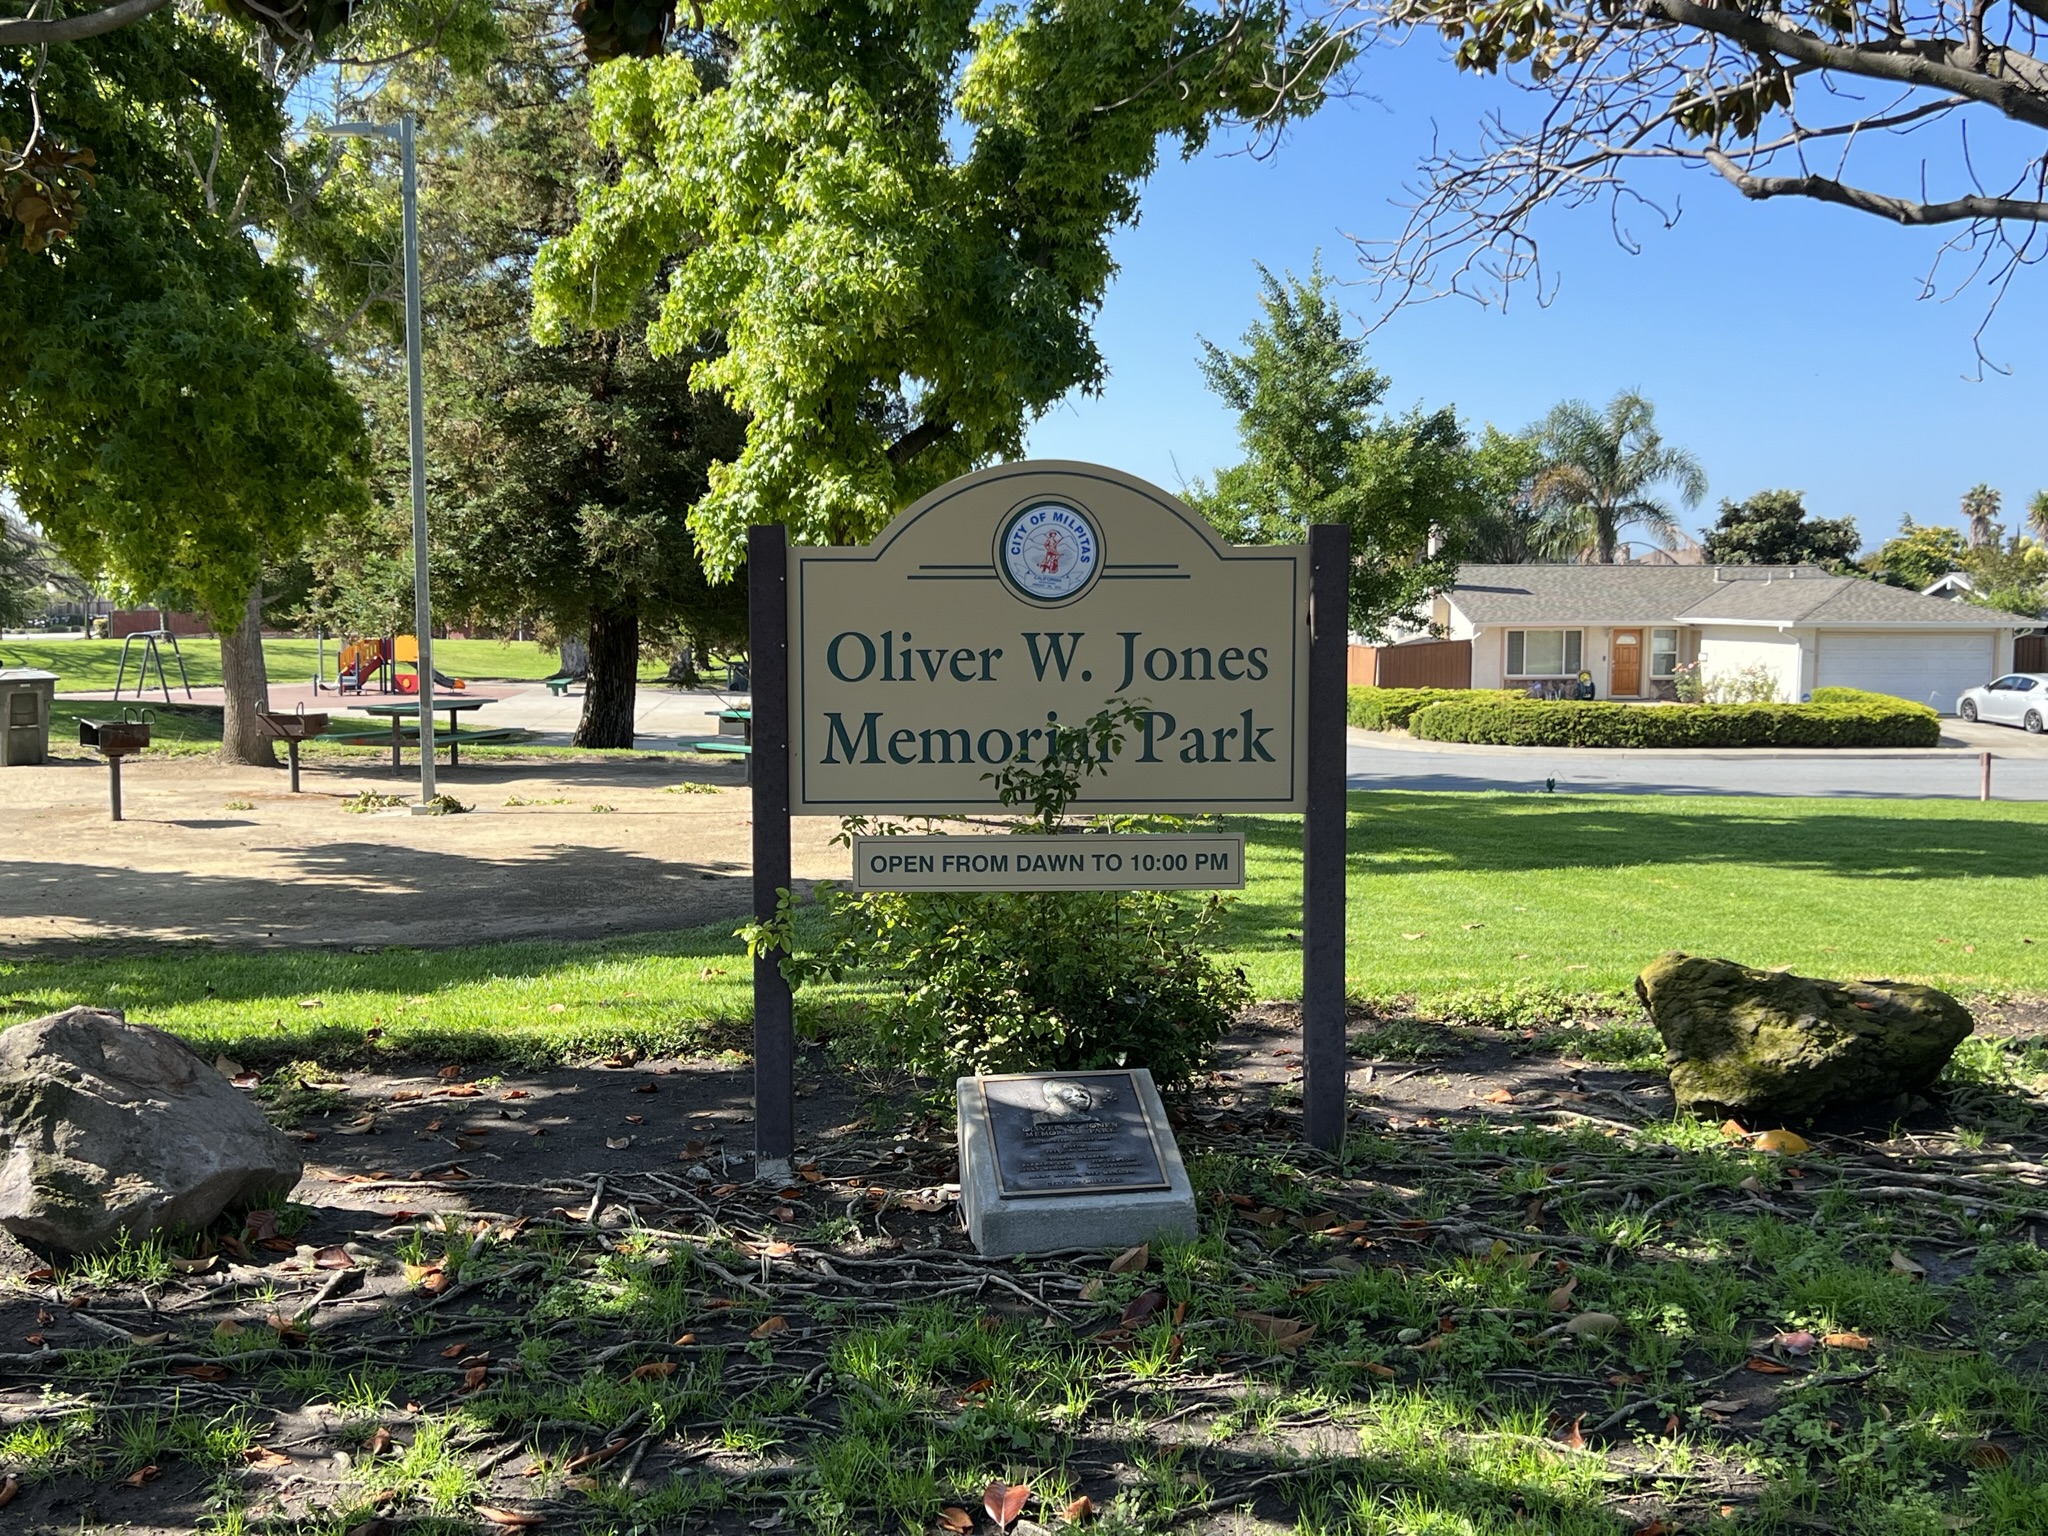 Oliver W. Jones Memorial Park